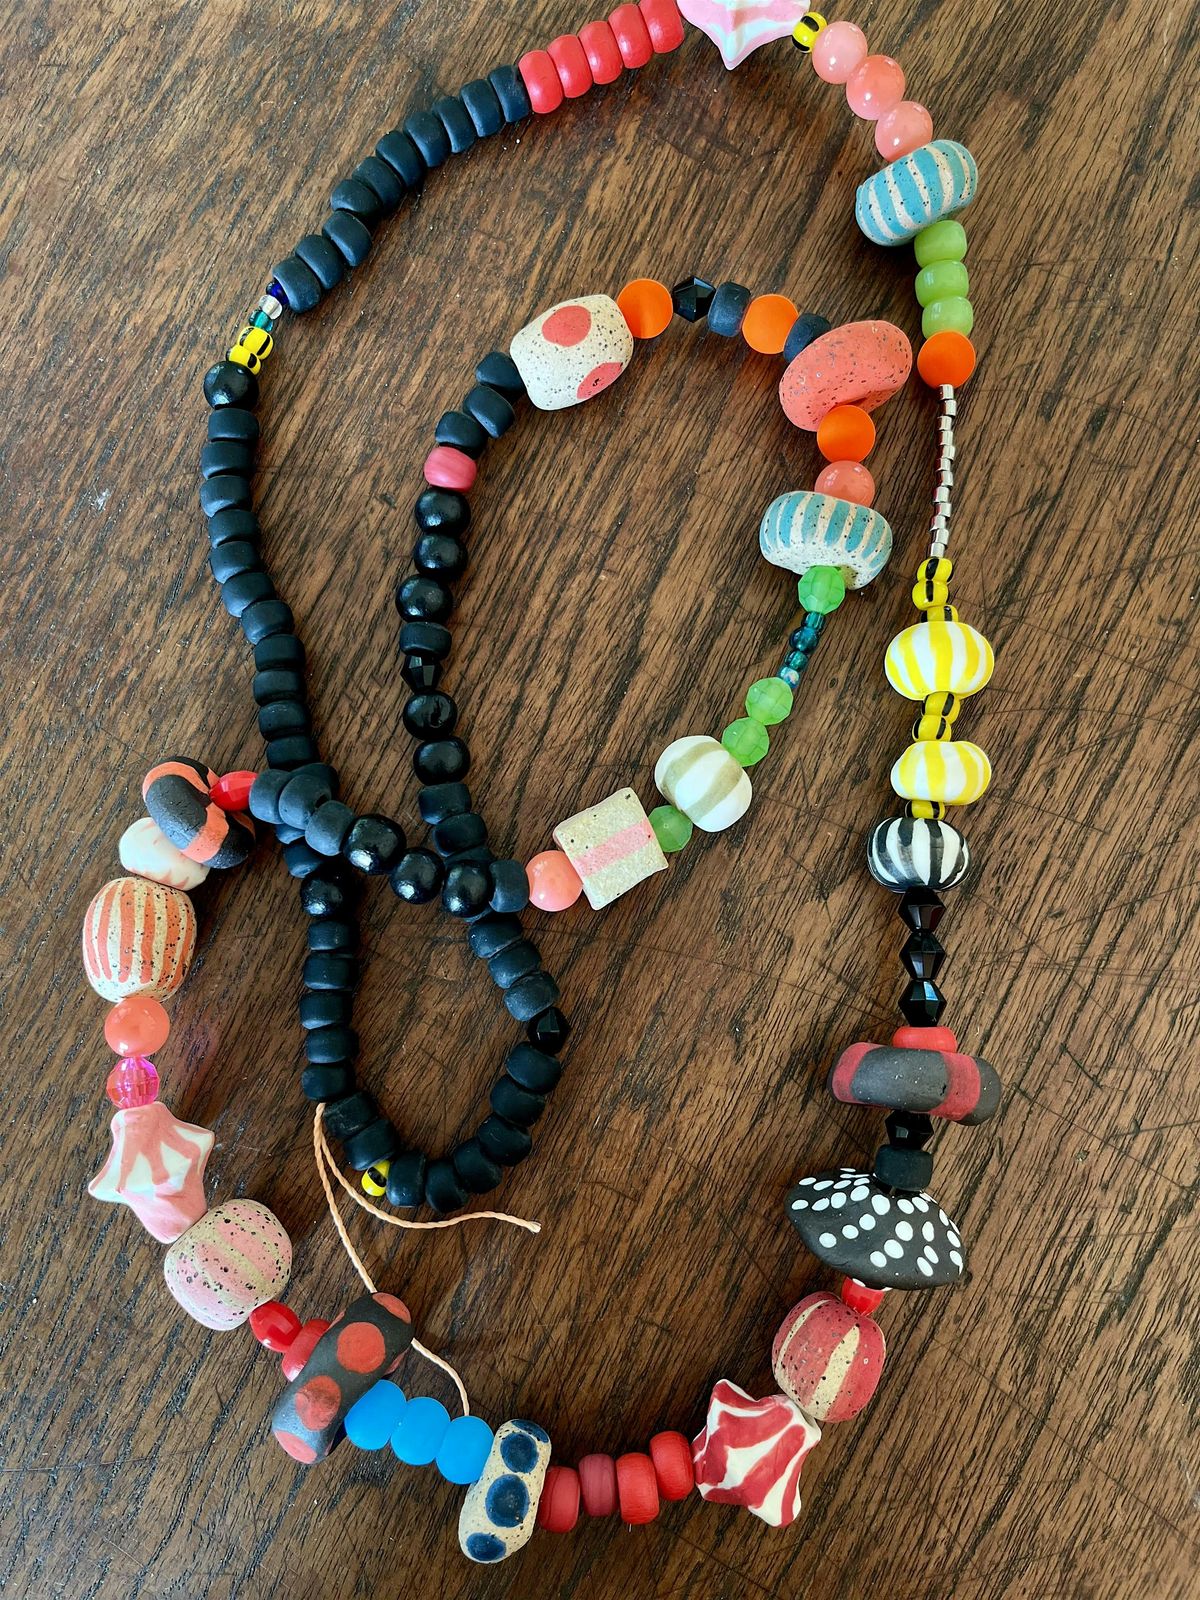 Handmade Clay Bead Necklaces